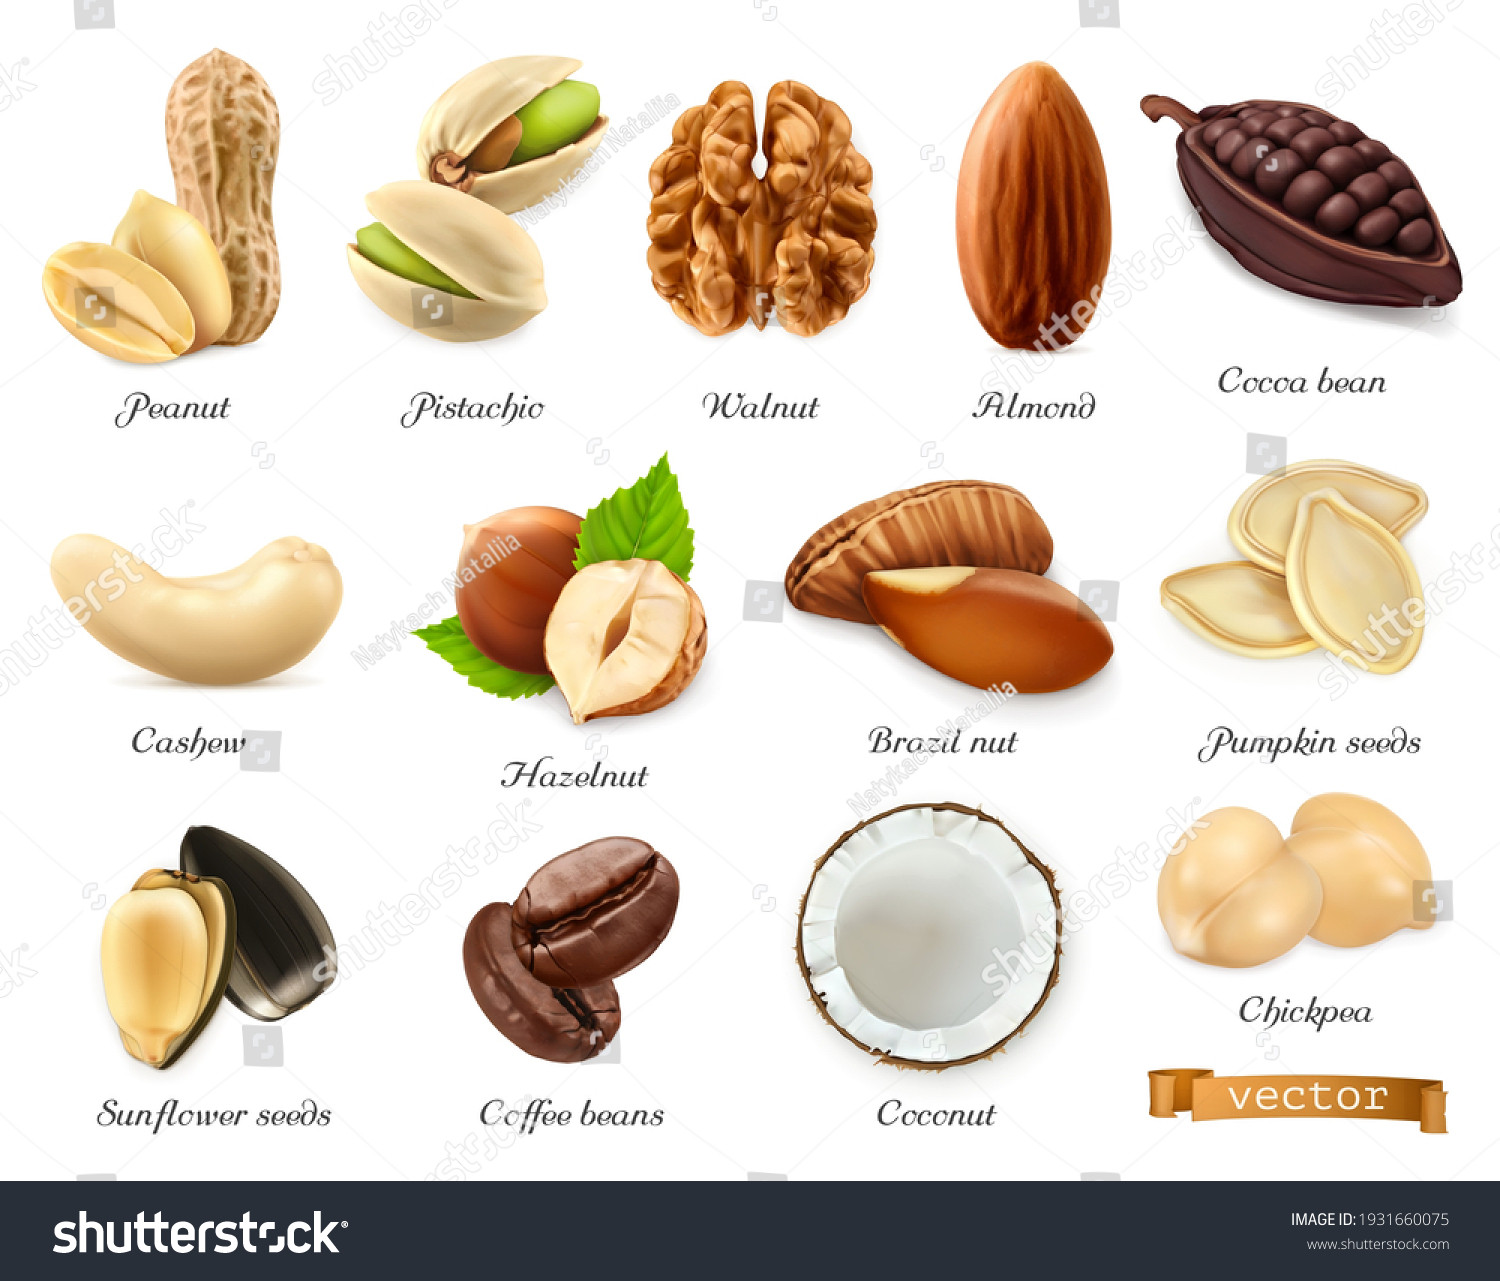 SVG of Nuts, seeds and beans 3d vector realistic objects set. Peanut, pistachio, walnut, almond, cocoa bean, cashew, hazelnut, brazil nut, pumpkin seeds, sunflower seeds, coffee, coconut, chickpea svg